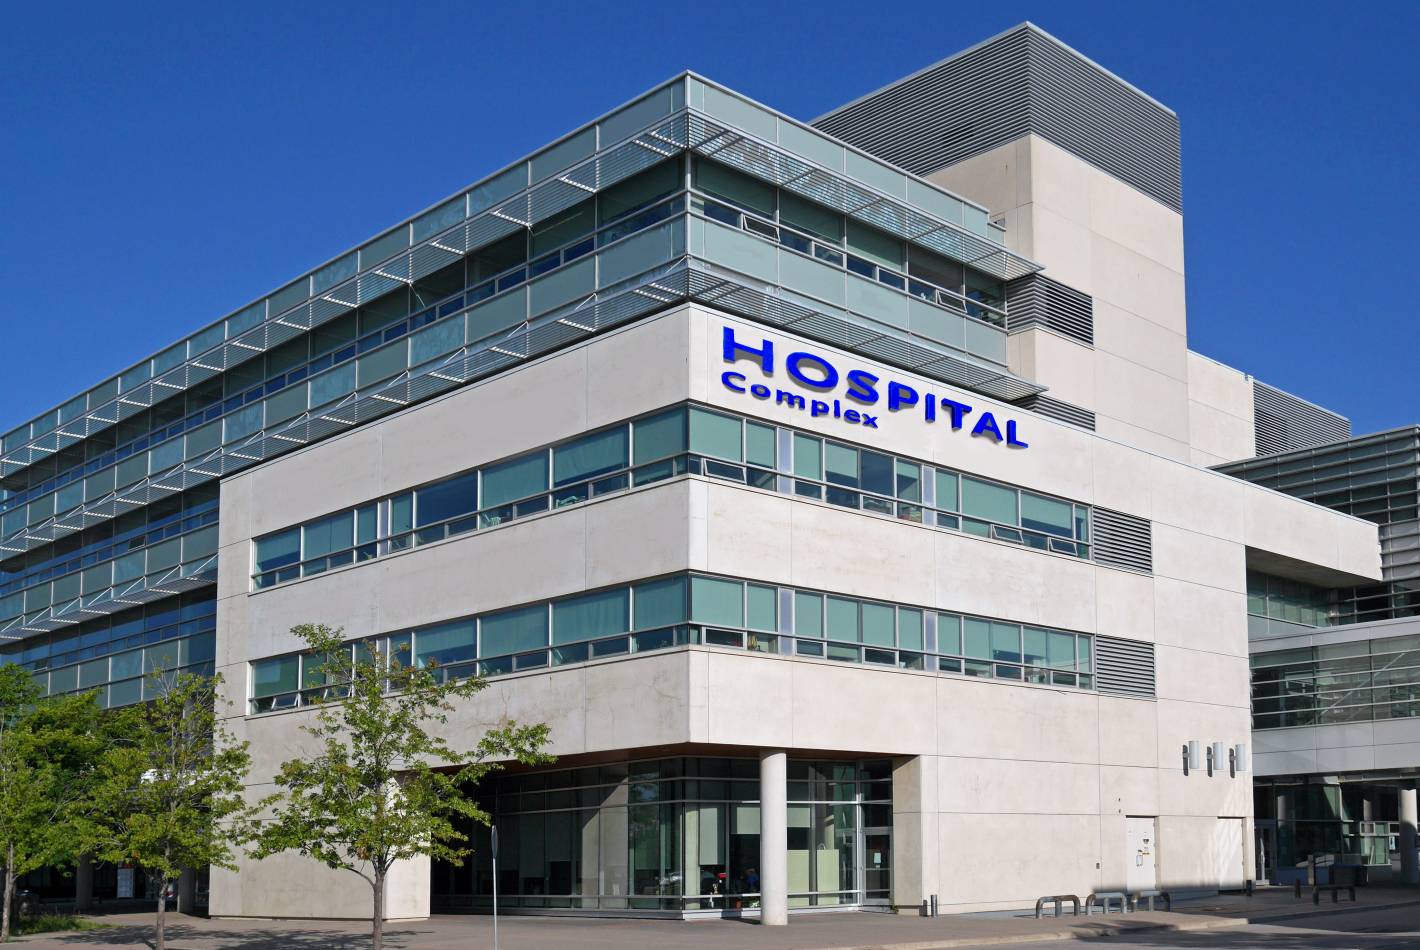 Rouse Hill Hospital